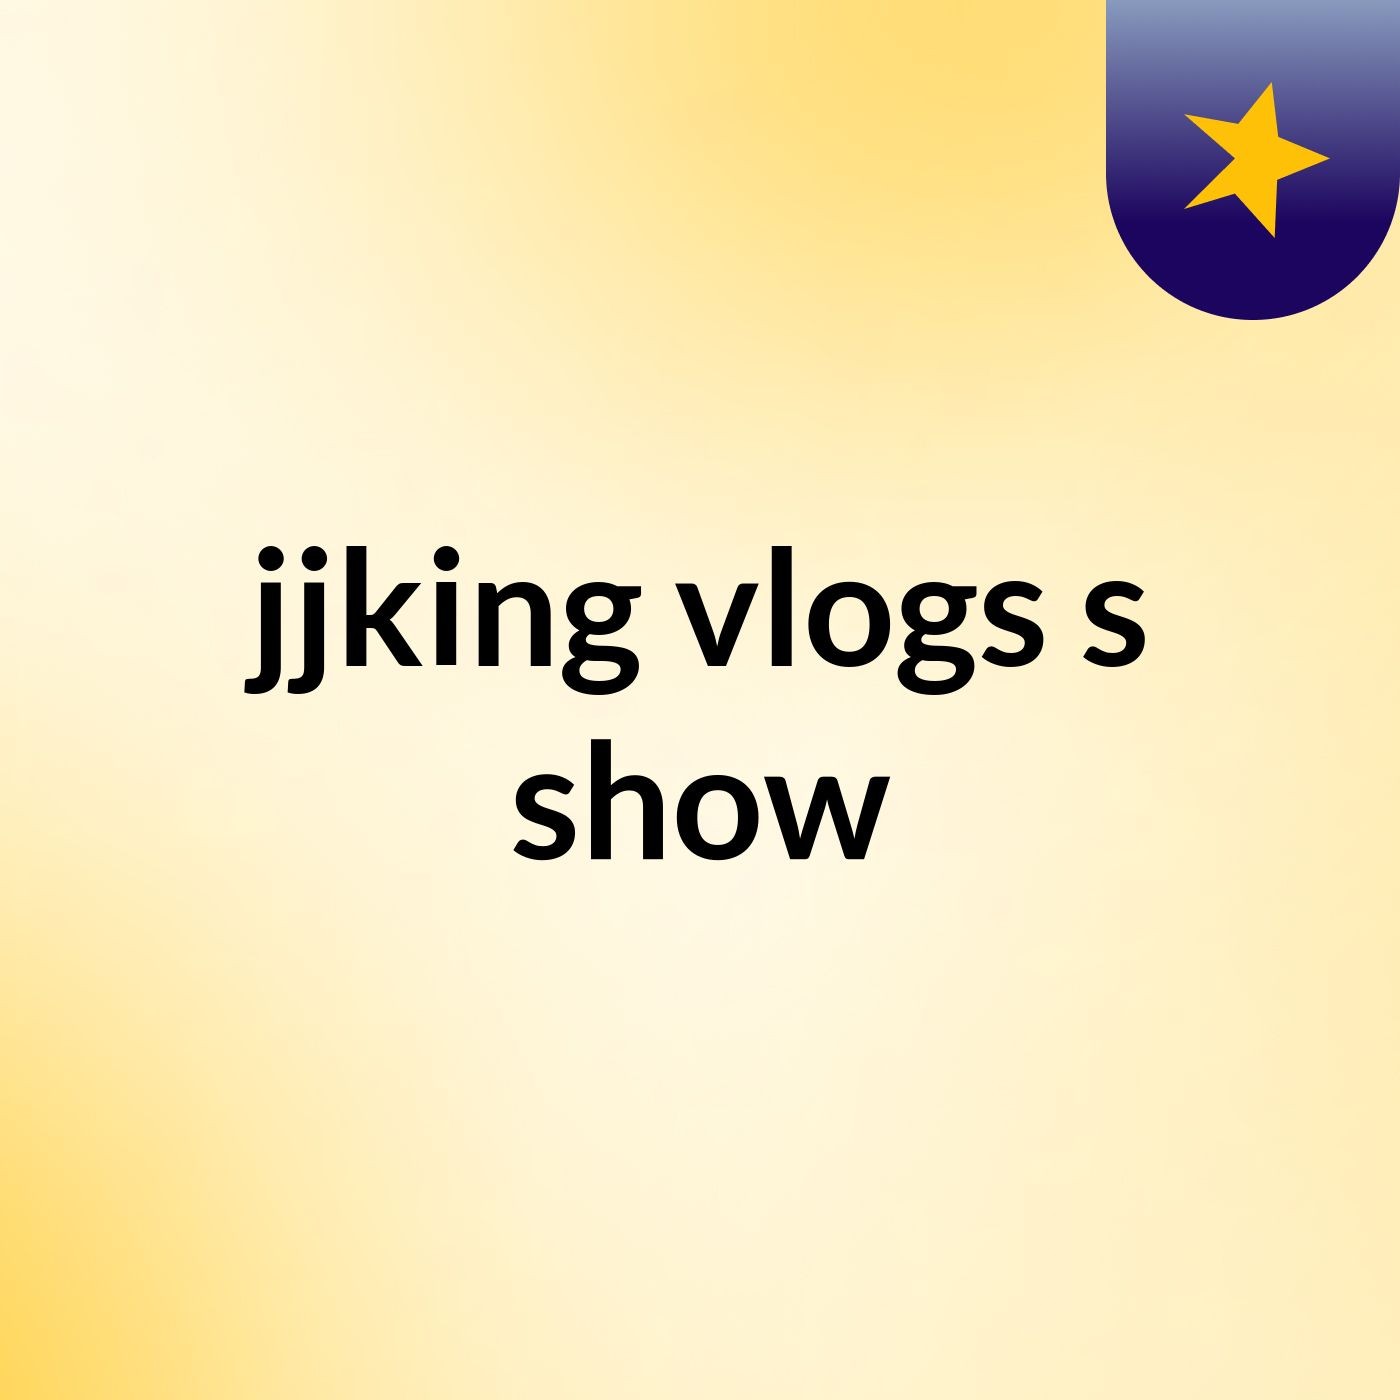 Episode 4 - jjking vlogs's show